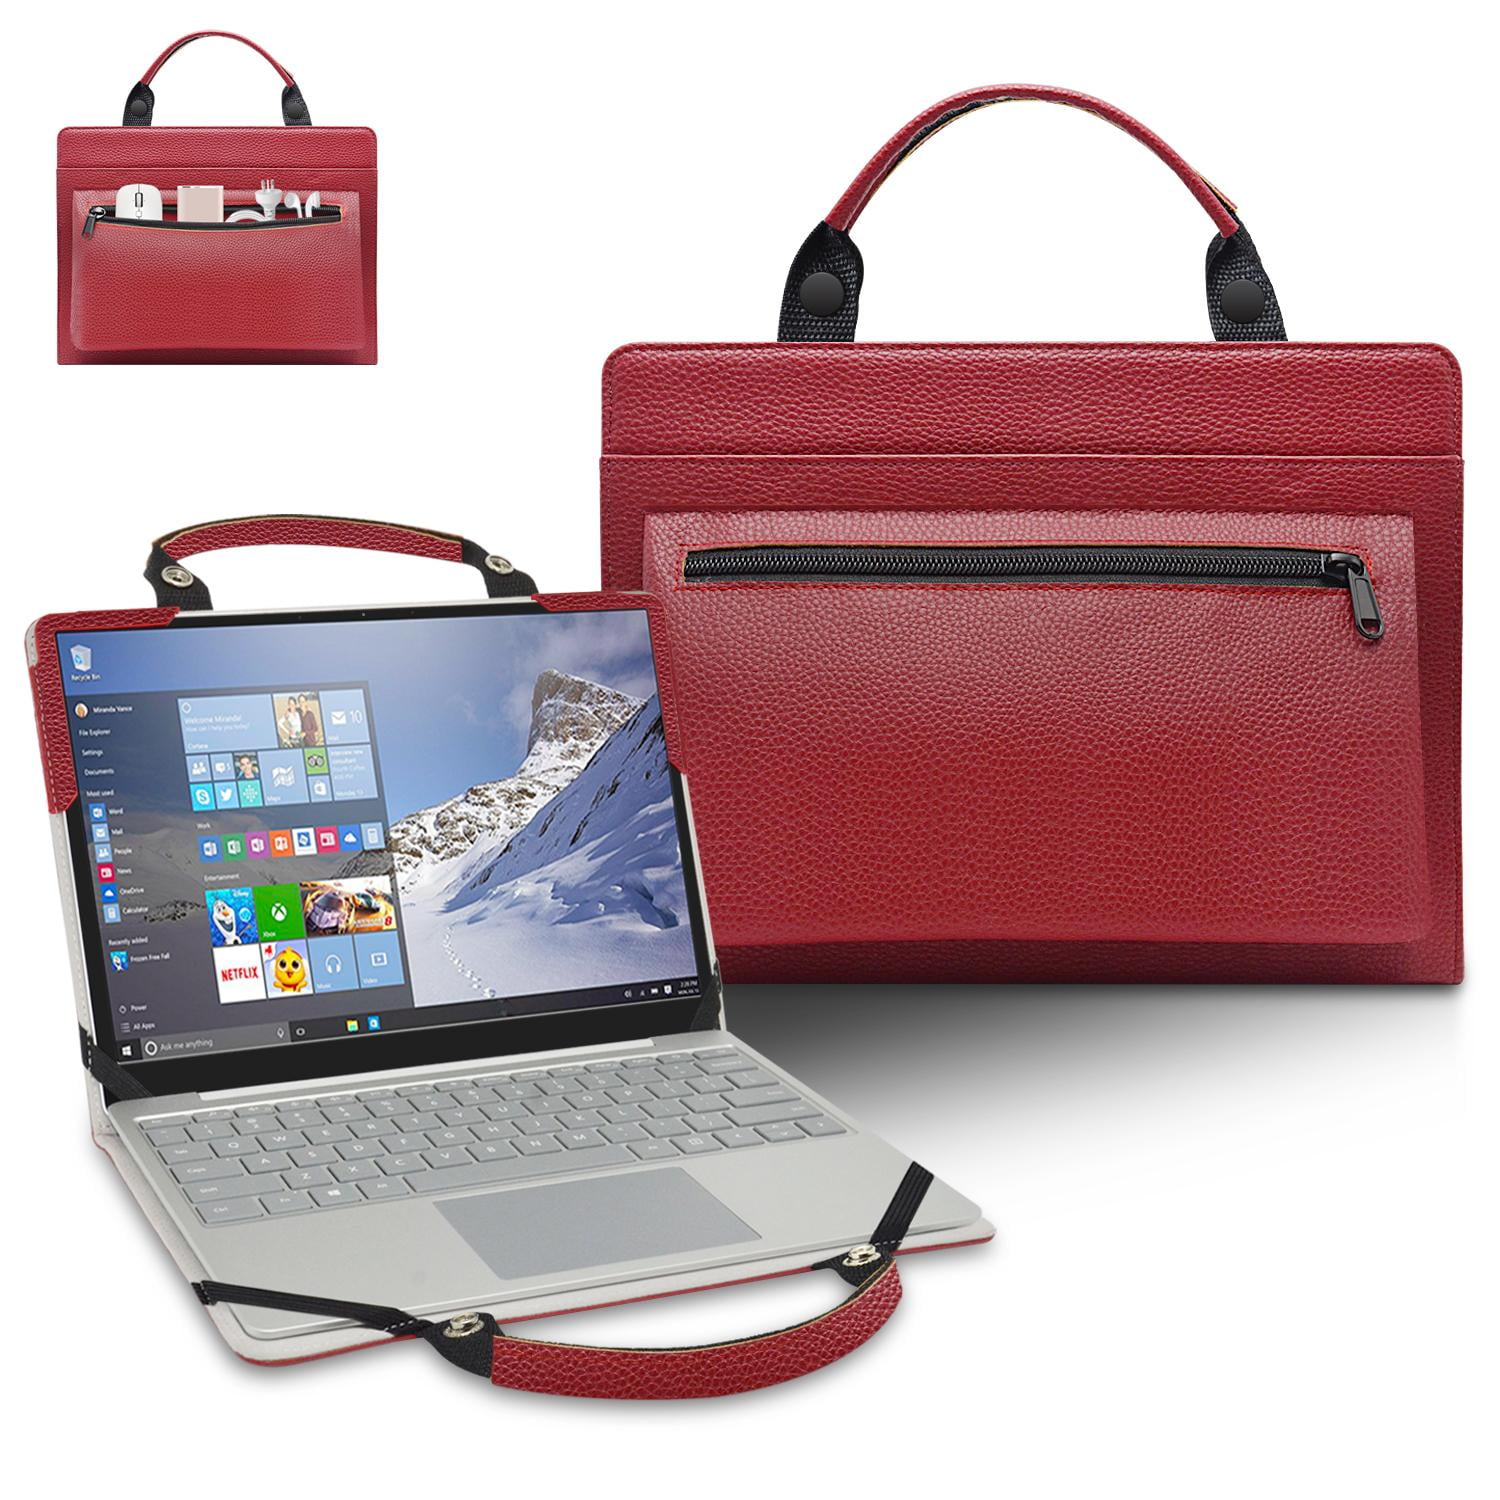 VanGoddy Laptop Notebook Sleeve Case Bag for 14" HP Chromebook 14/ Pavilion x360 